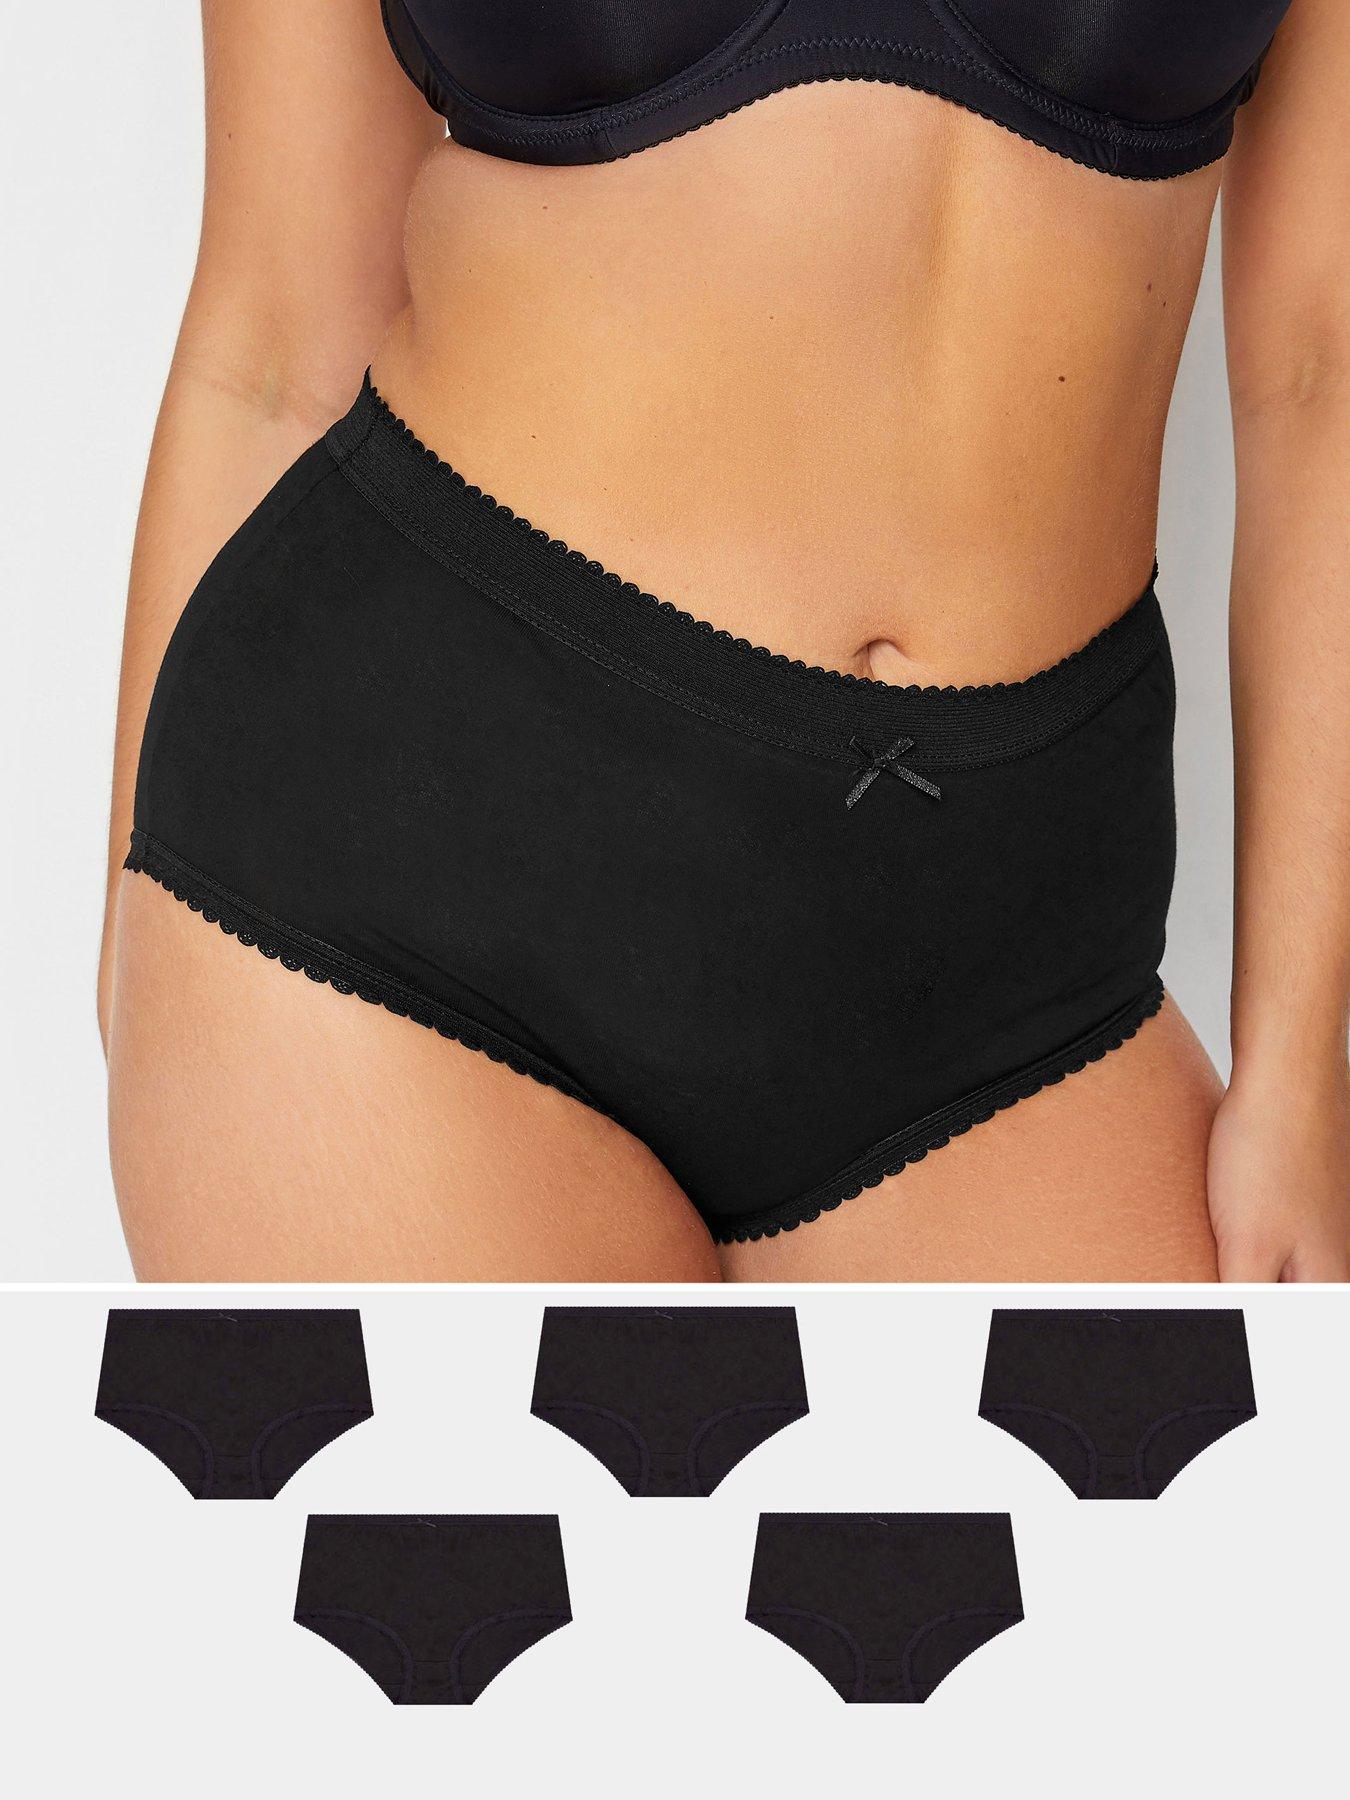 6 Pack 100% Cotton Maxi Full Comfort Underwear Ladies Briefs Fit